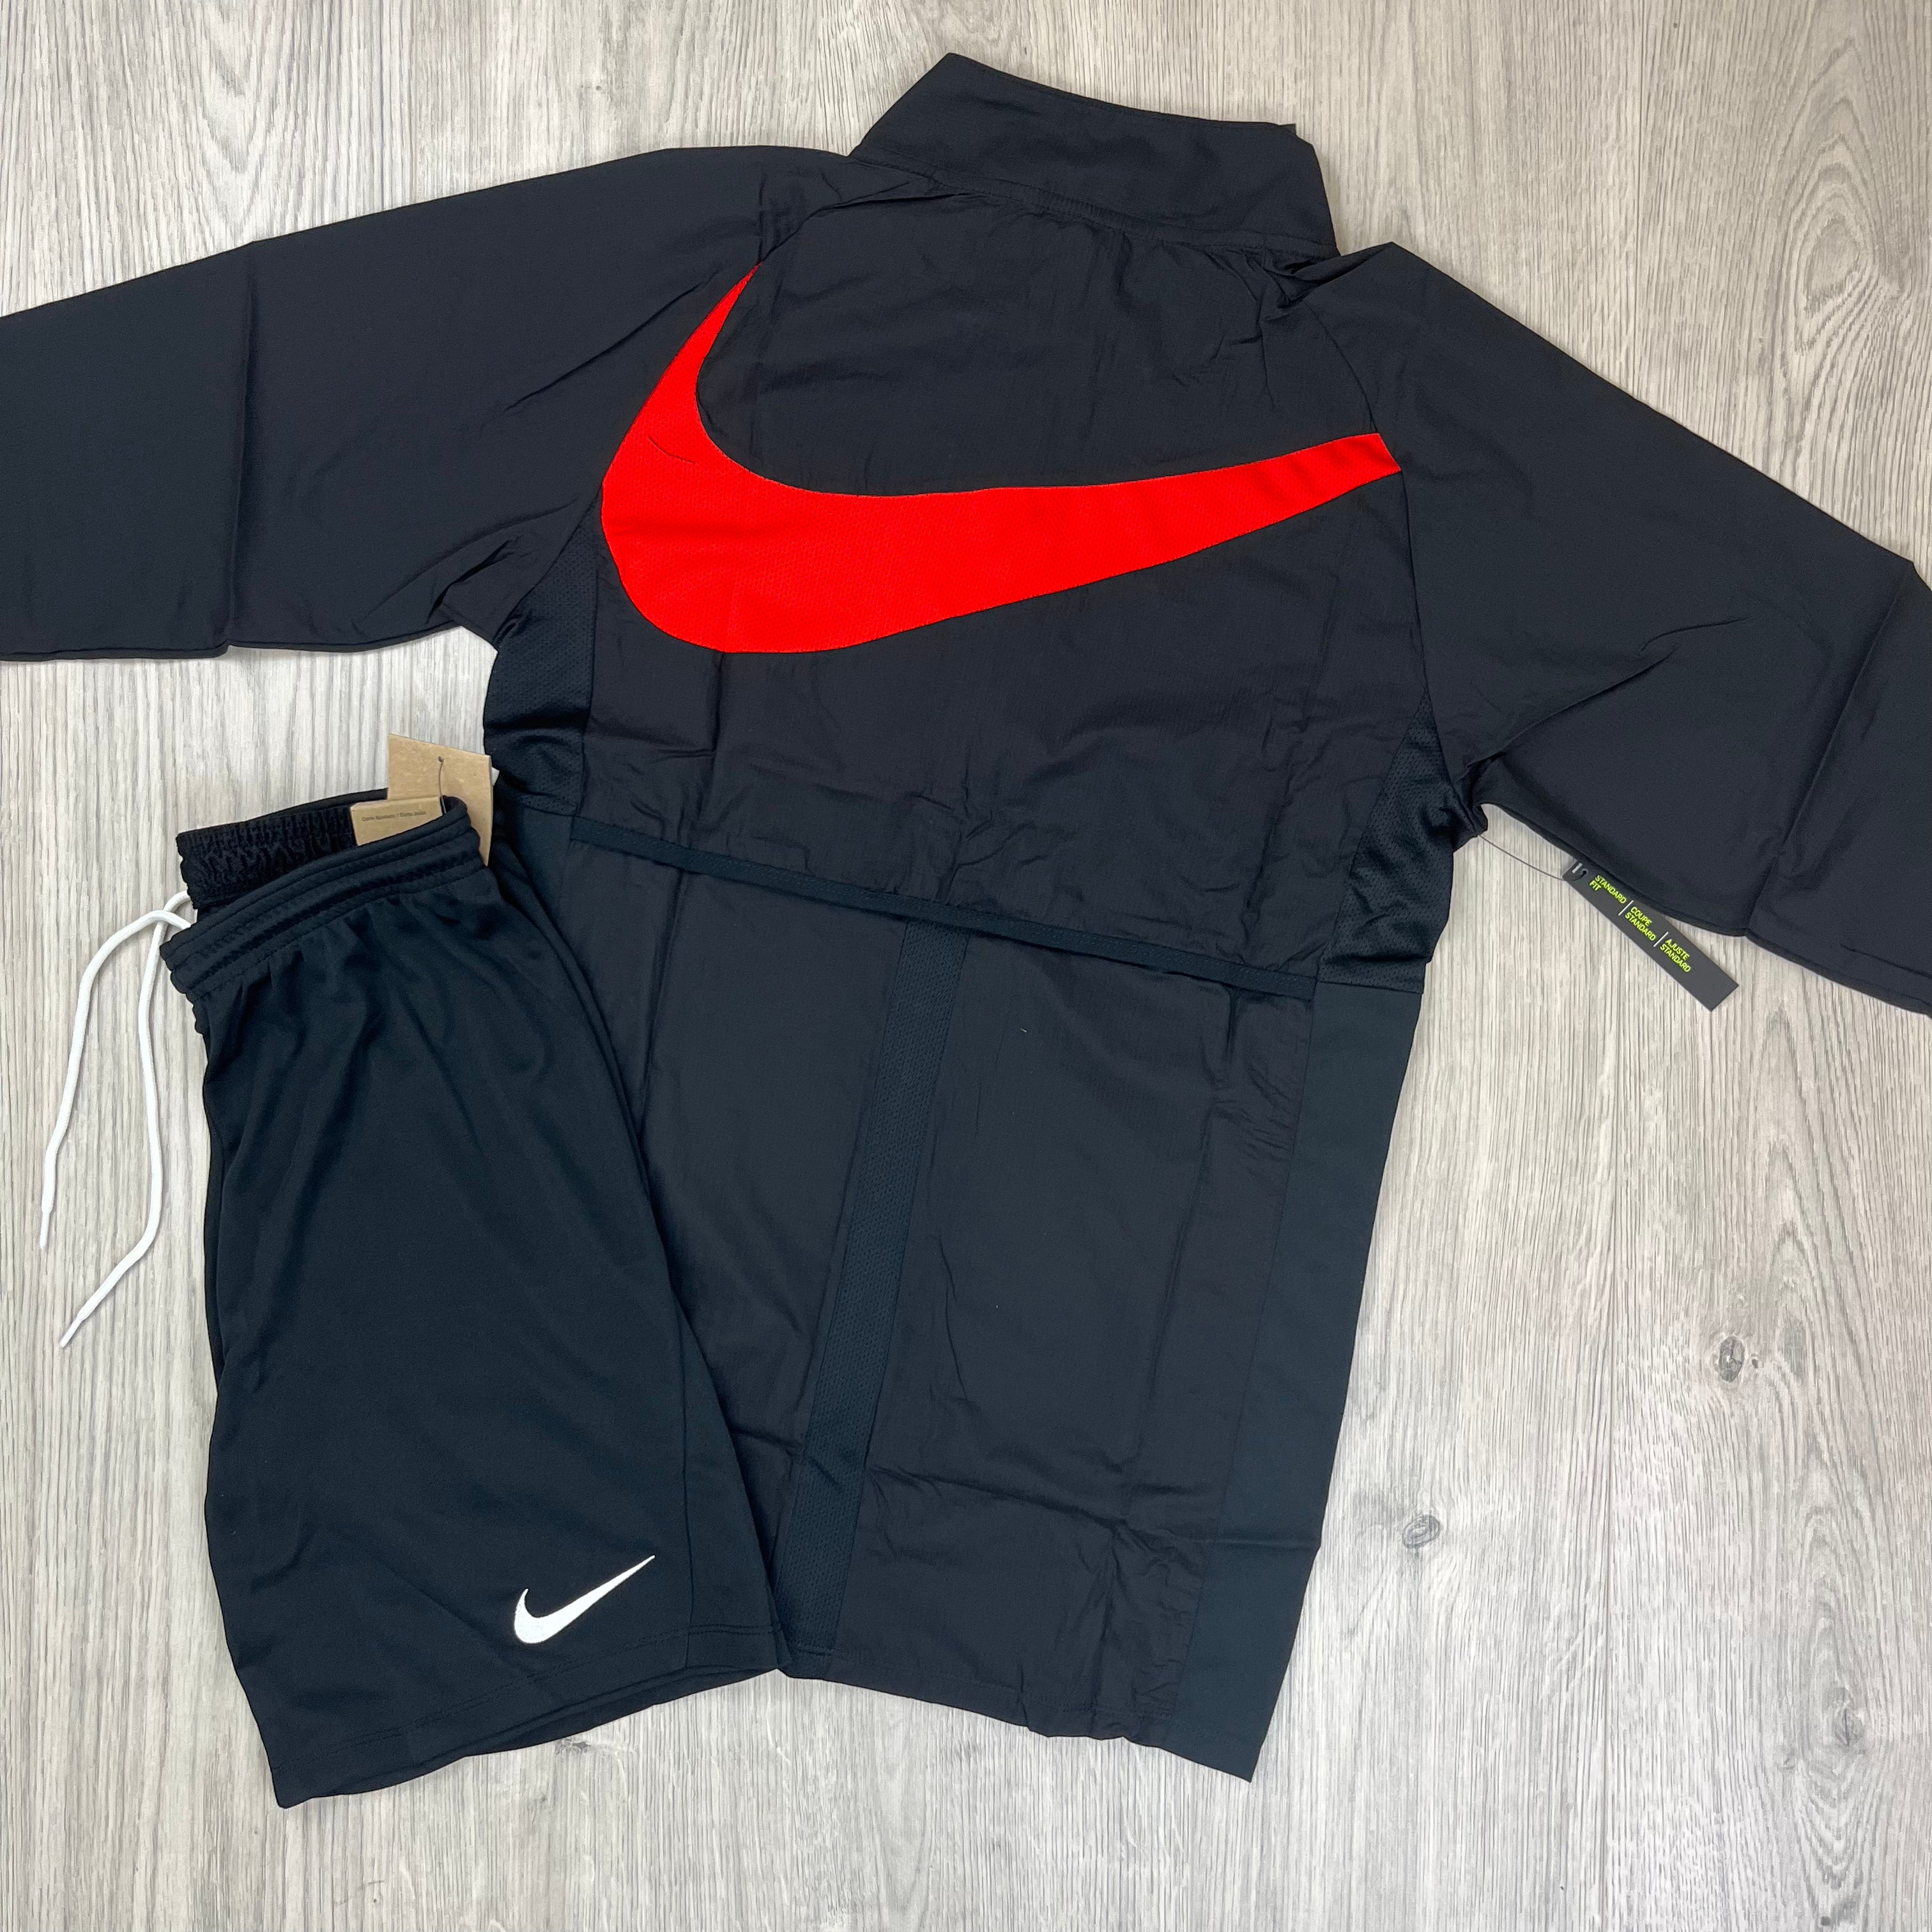 Nike Swoosh Set - Black